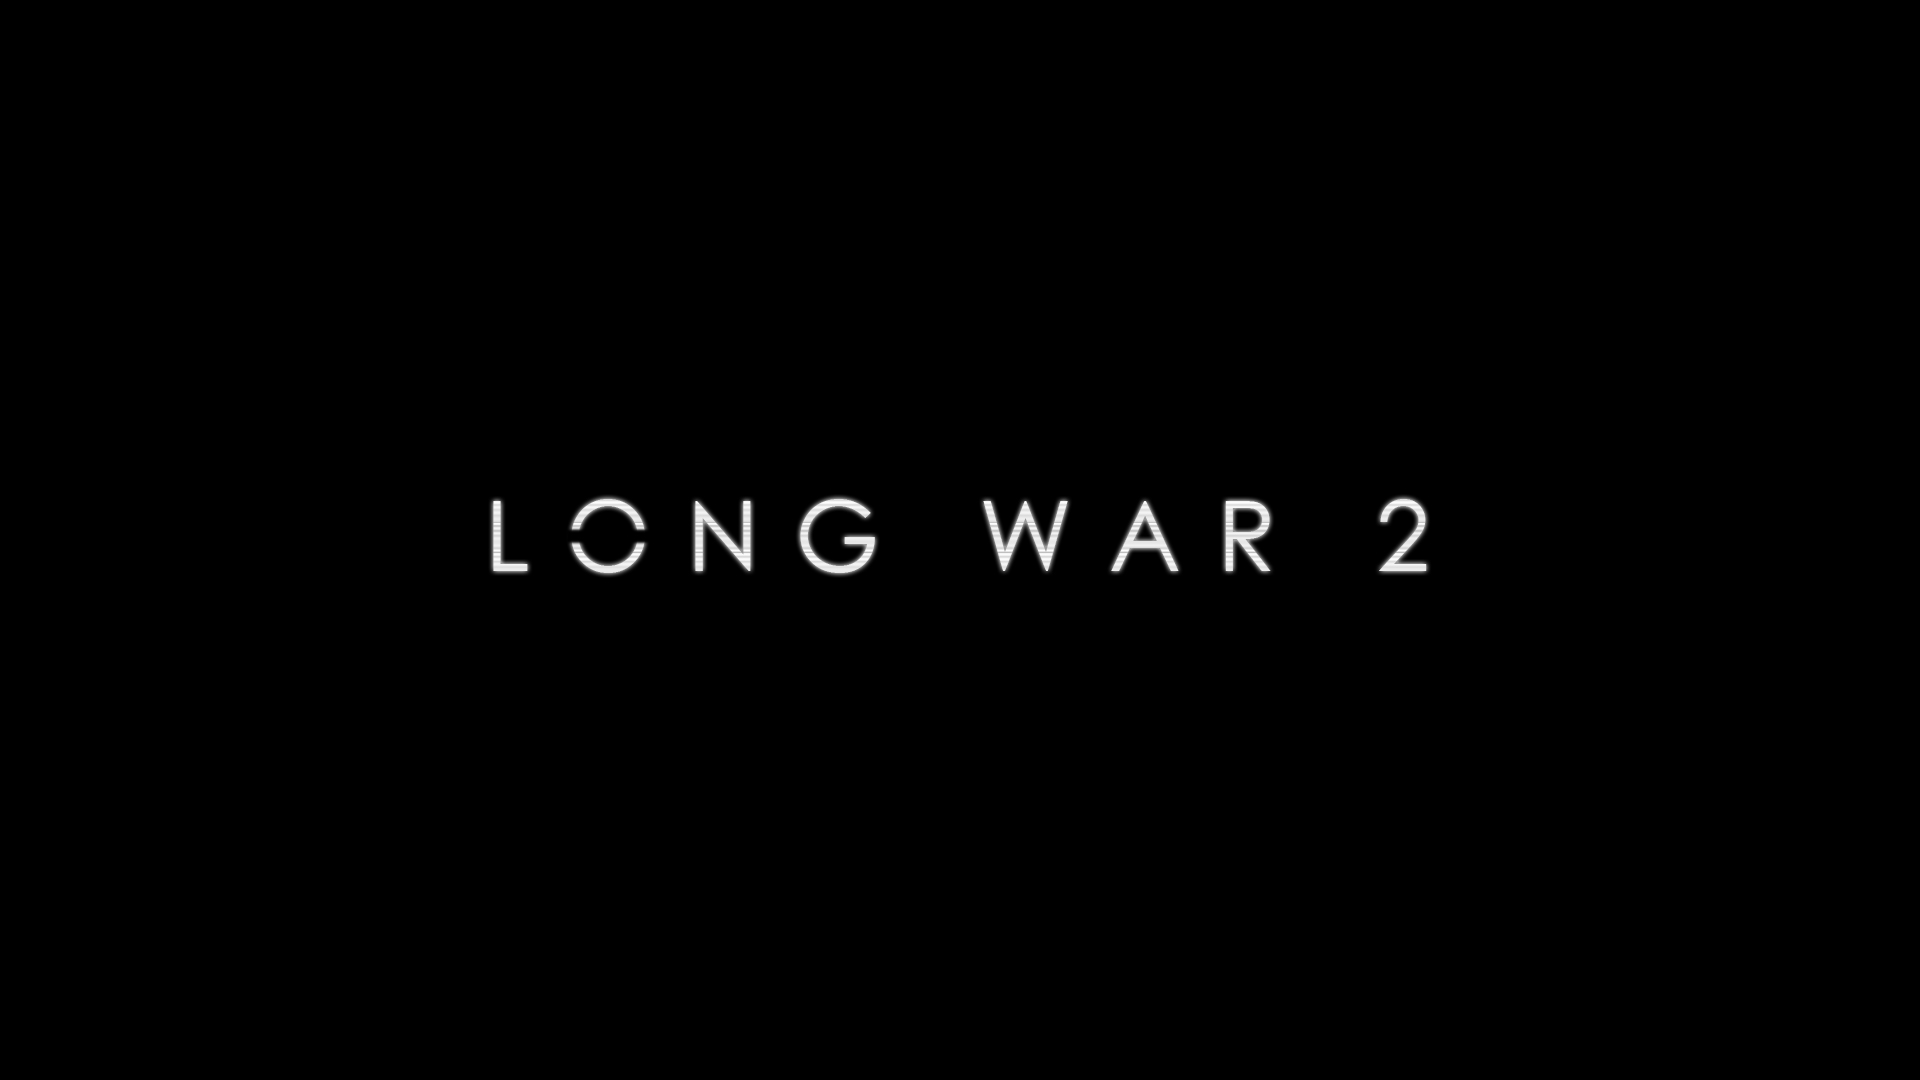 long war studios xcom 2 mods